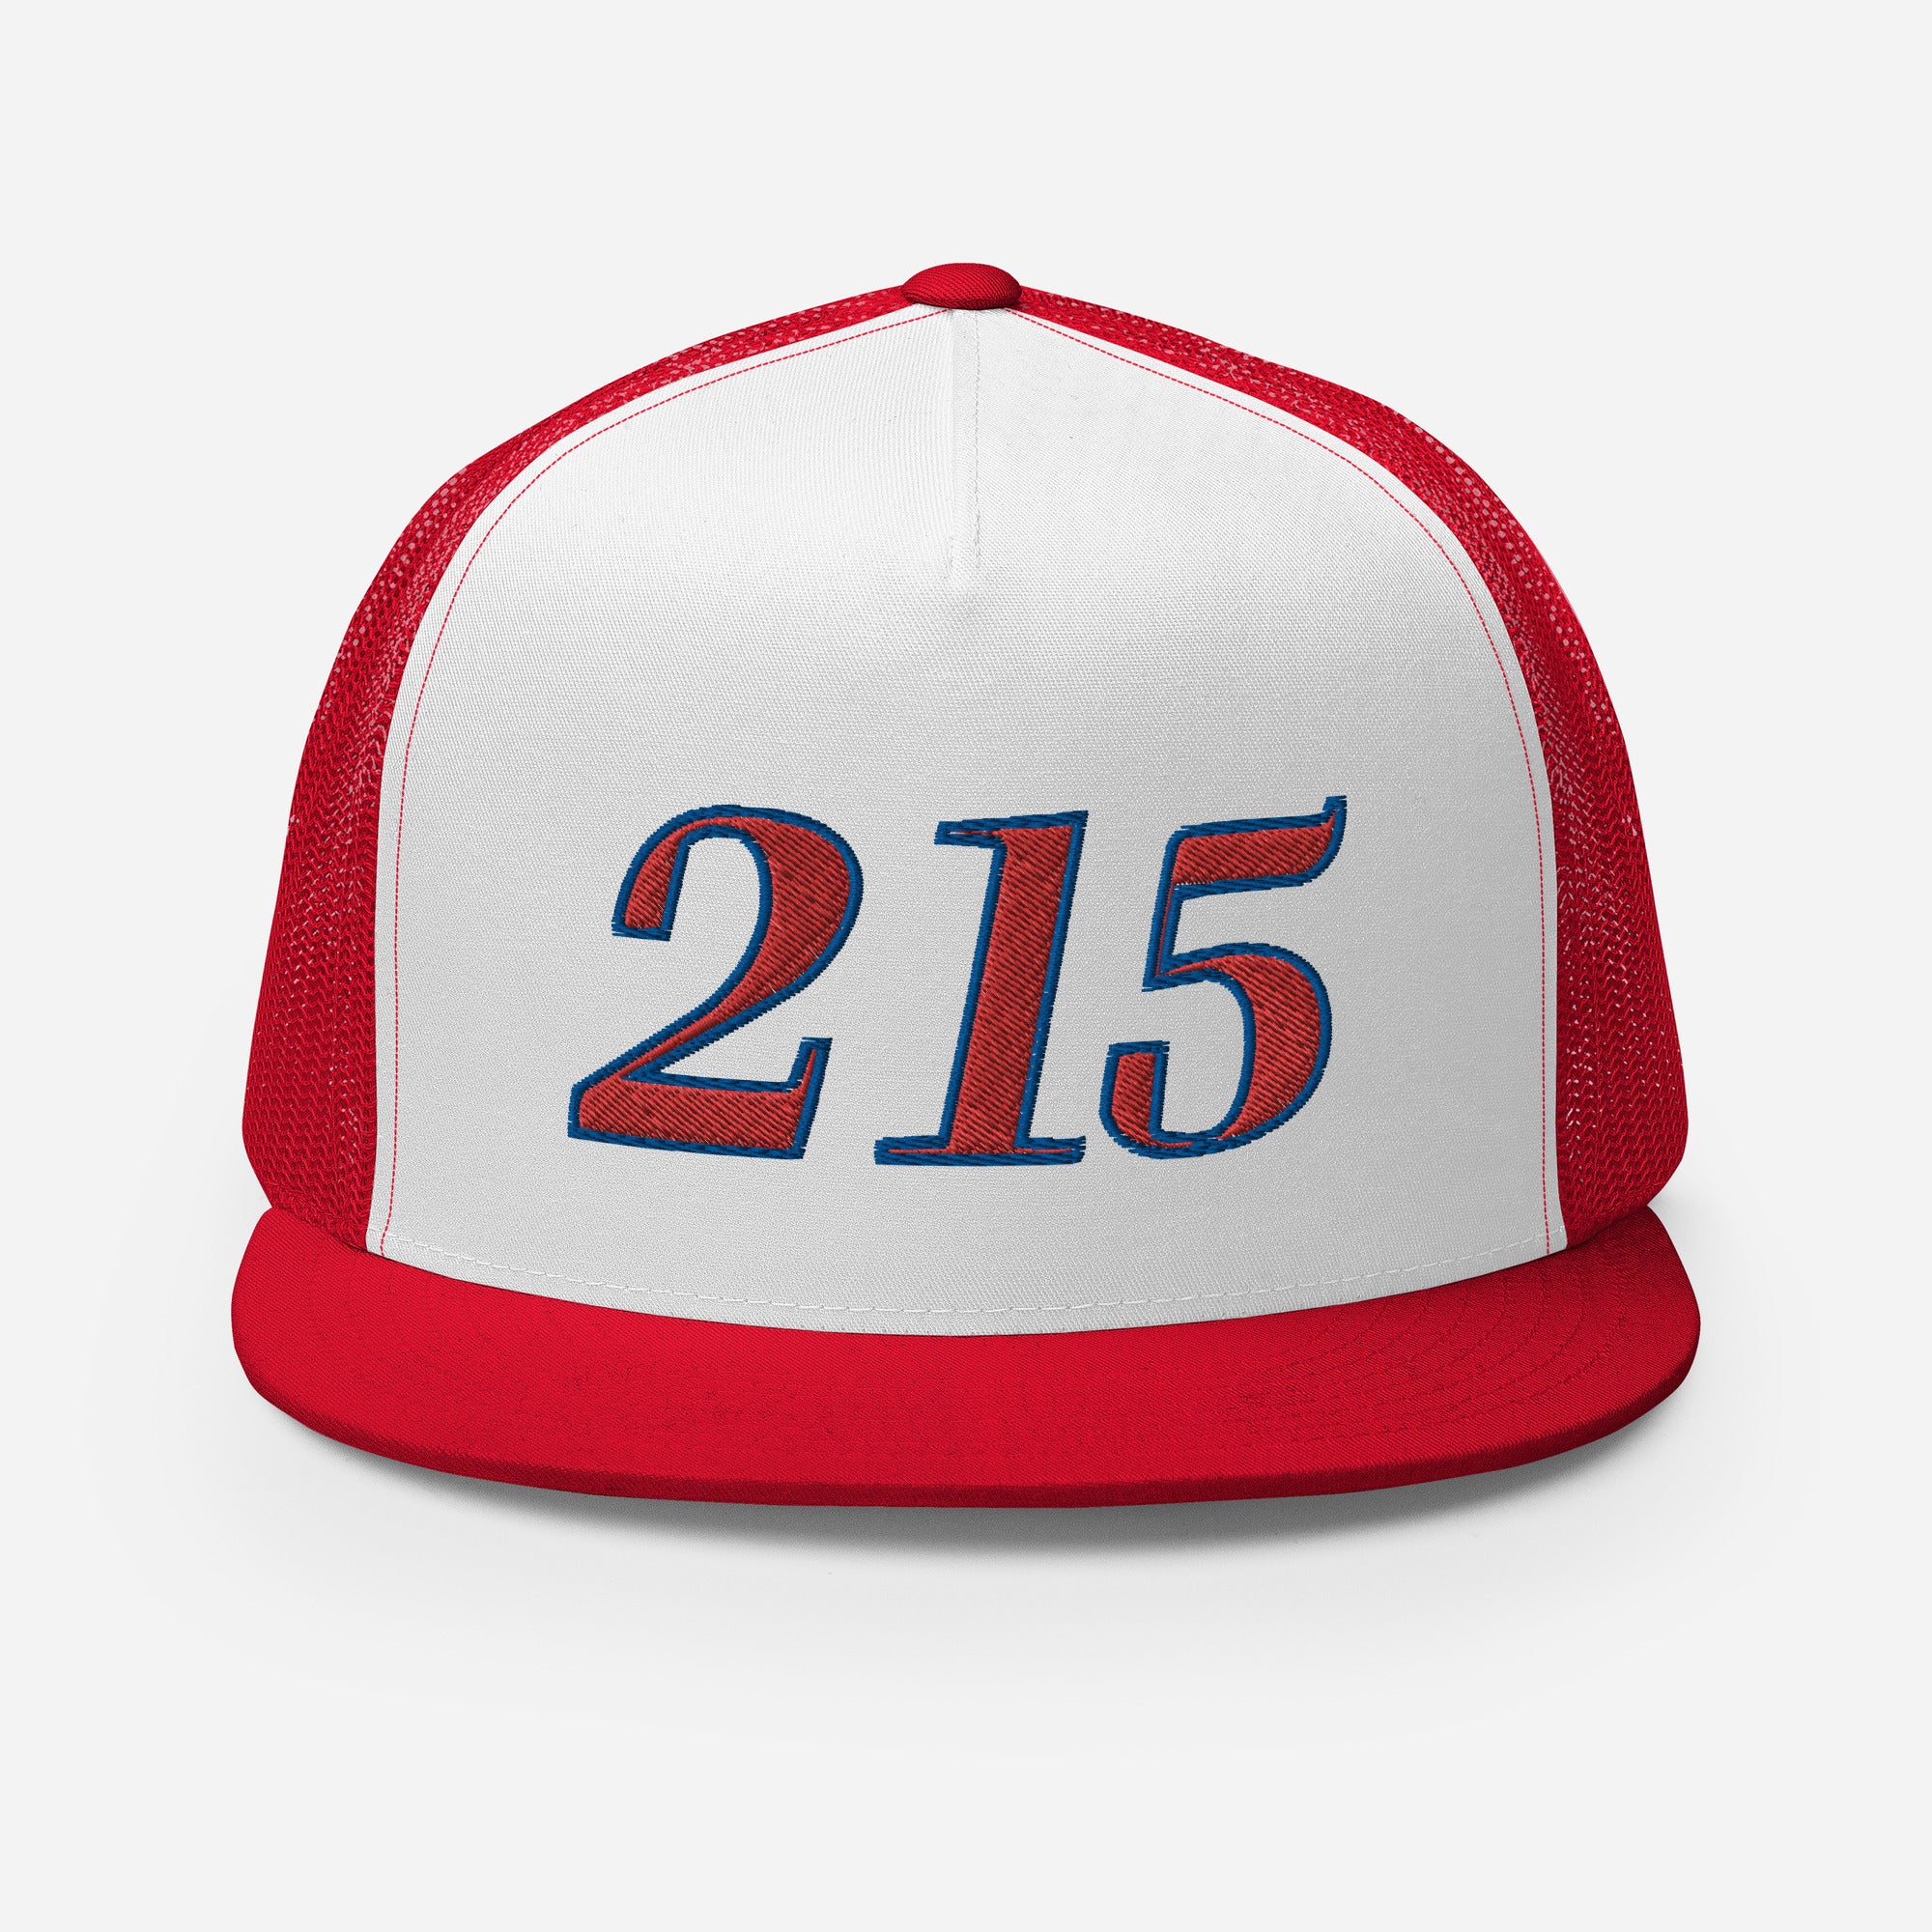 "215 Liberty" Trucker Hat